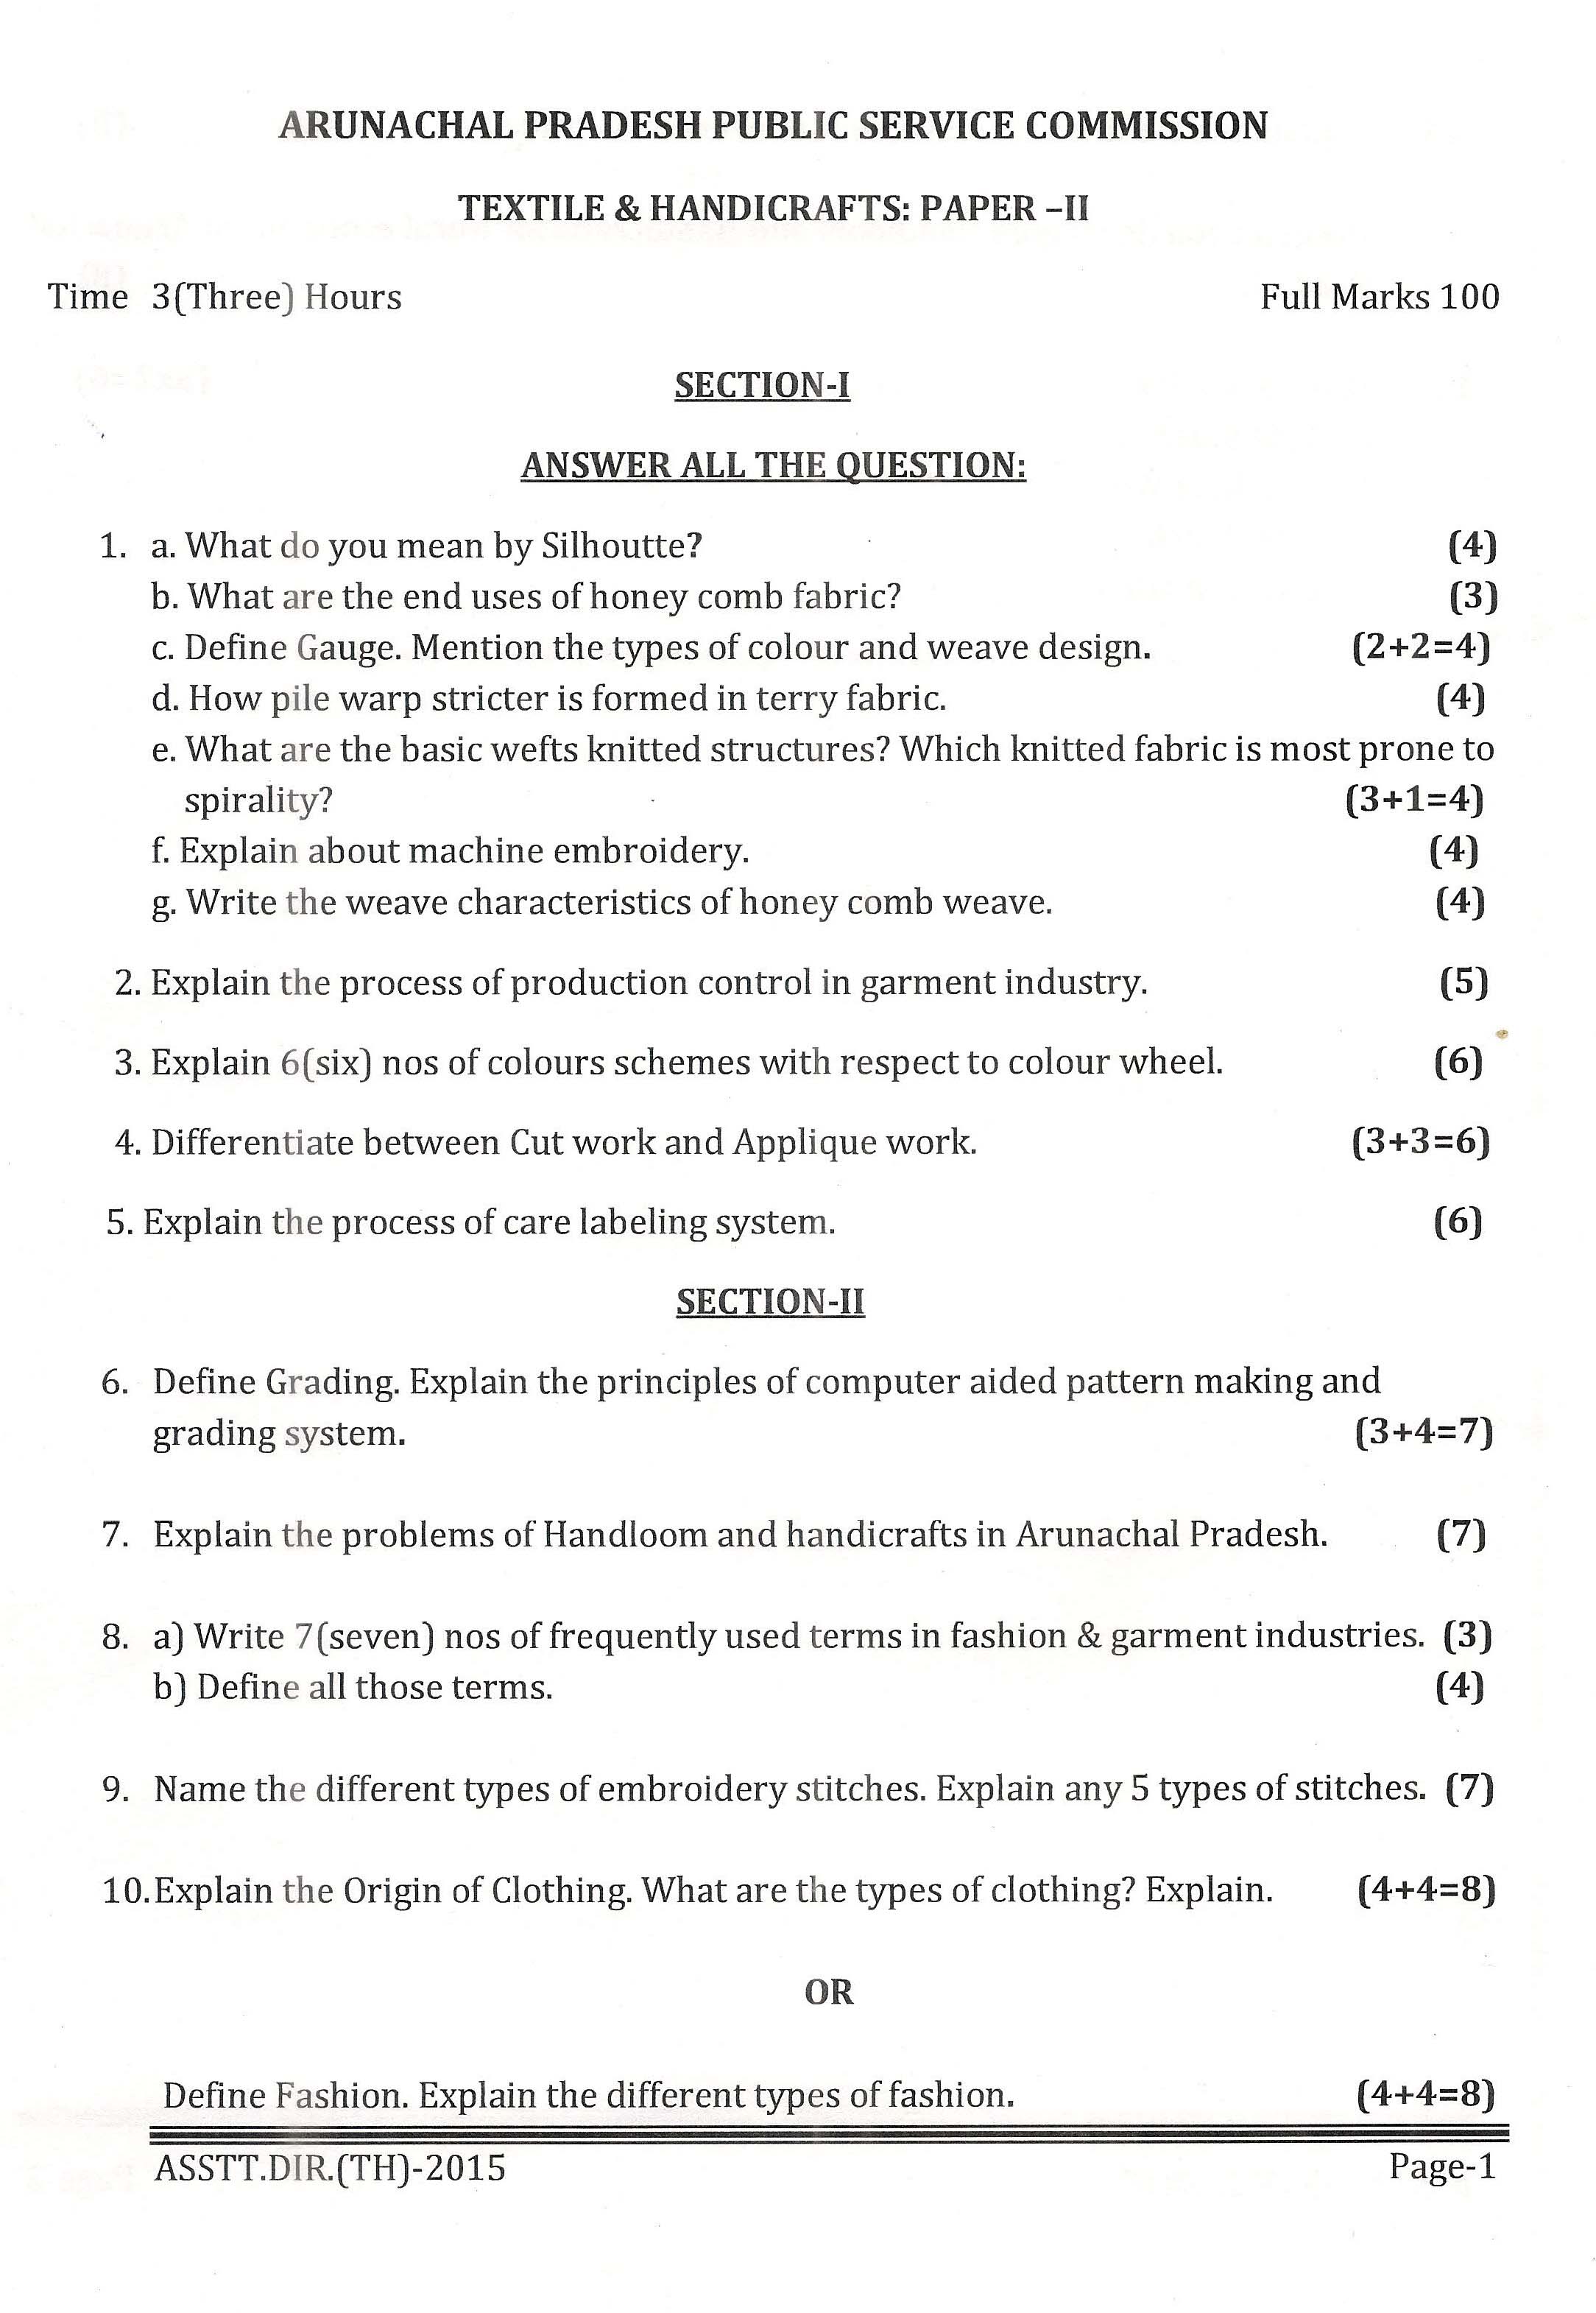 APPSC Assistant Director Textiles and Handicrafts Exam 2015 Paper II 1